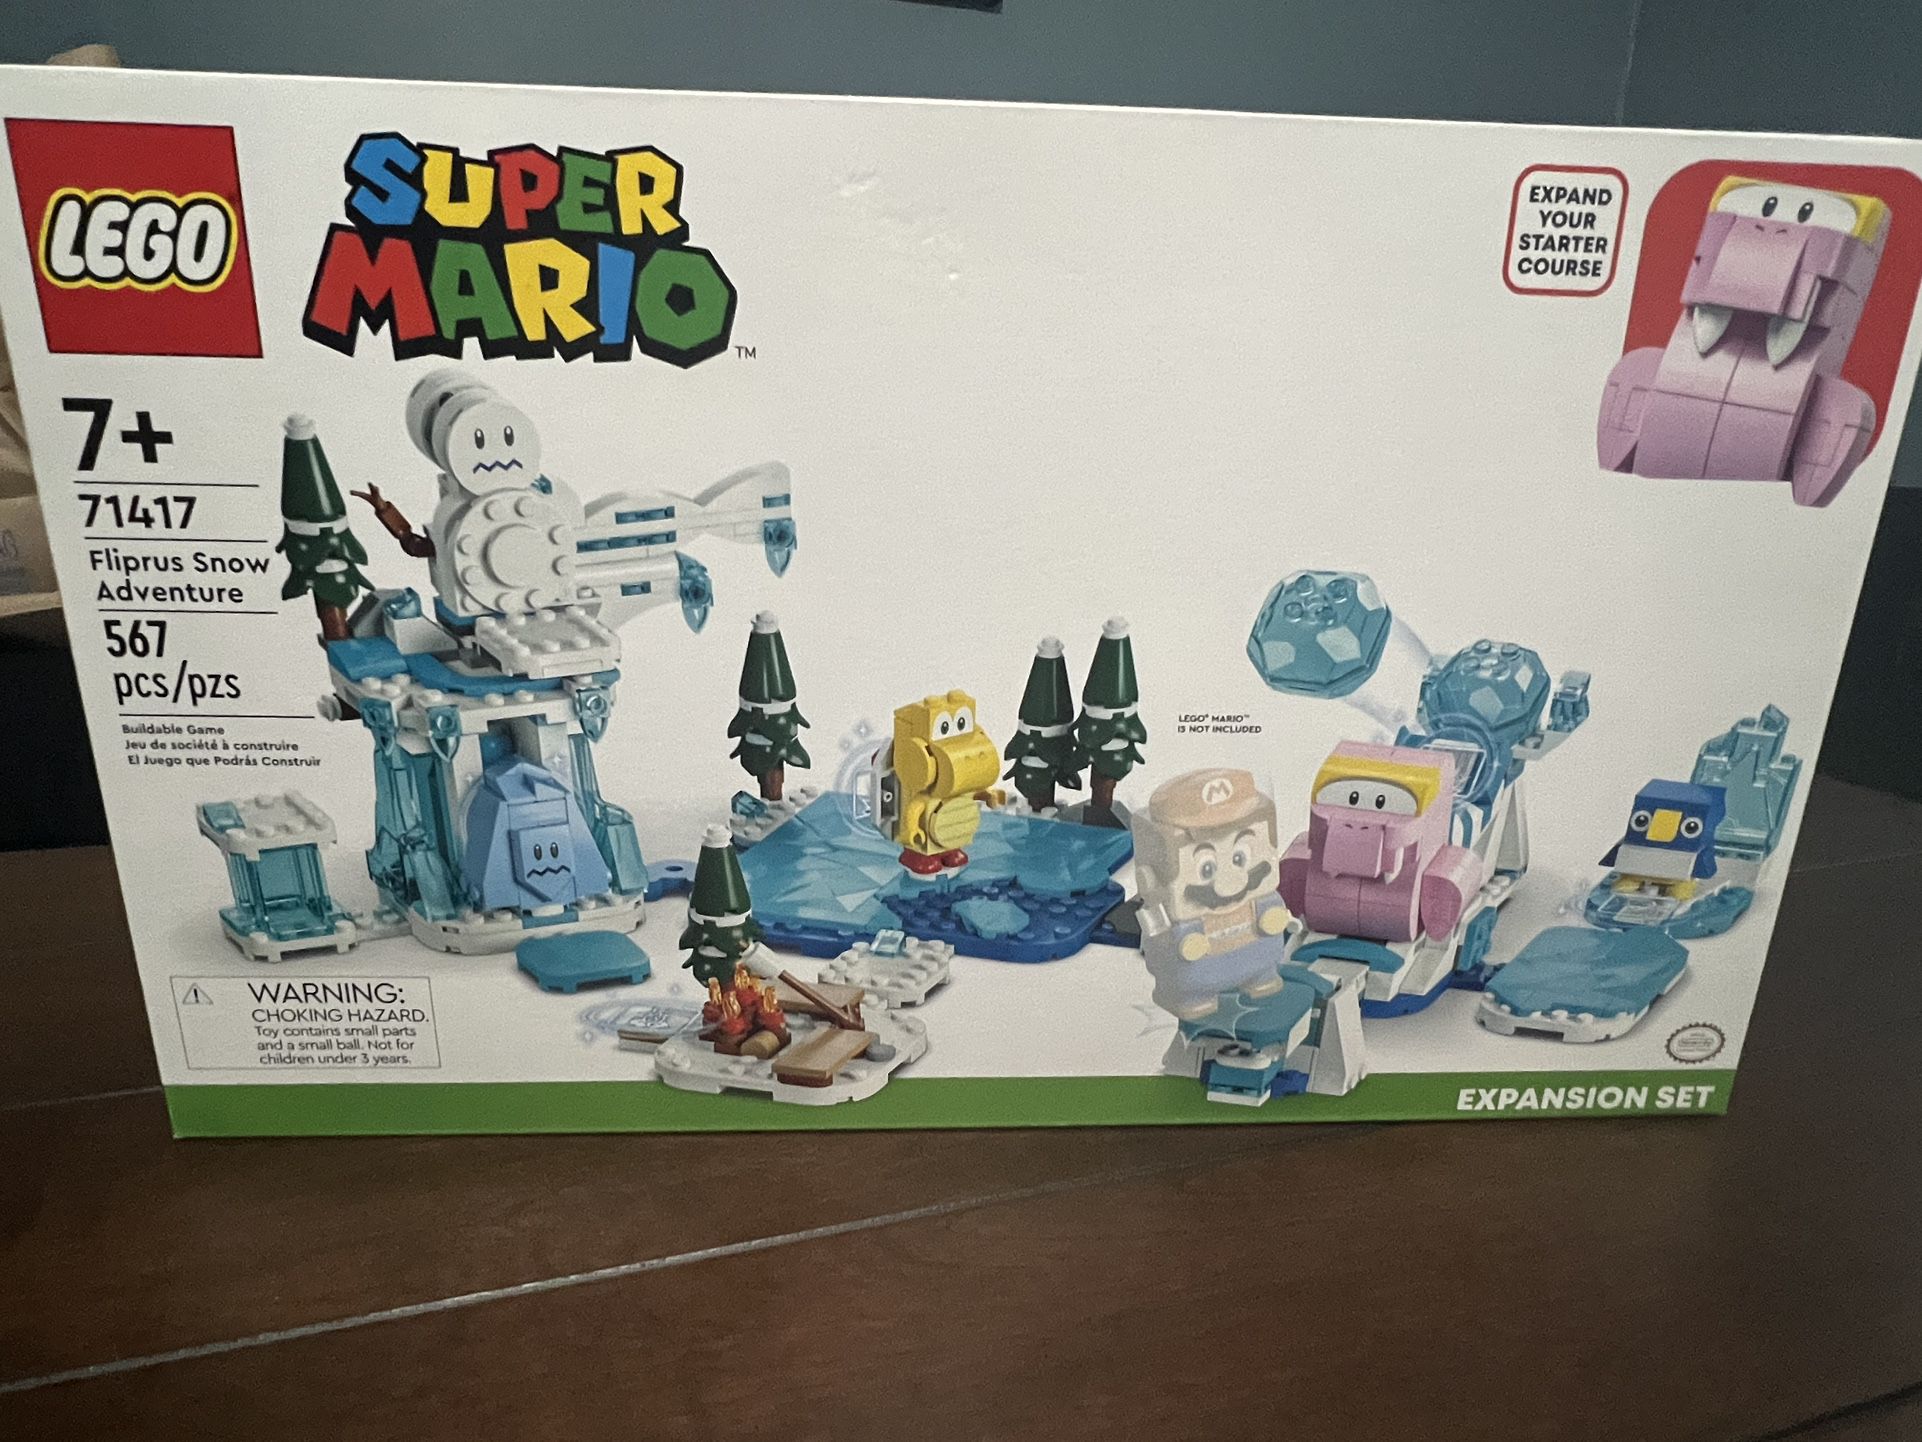  LEGO Super Mario Fliprus Snow Adventure Expansion Set 71417, Toy for Kids